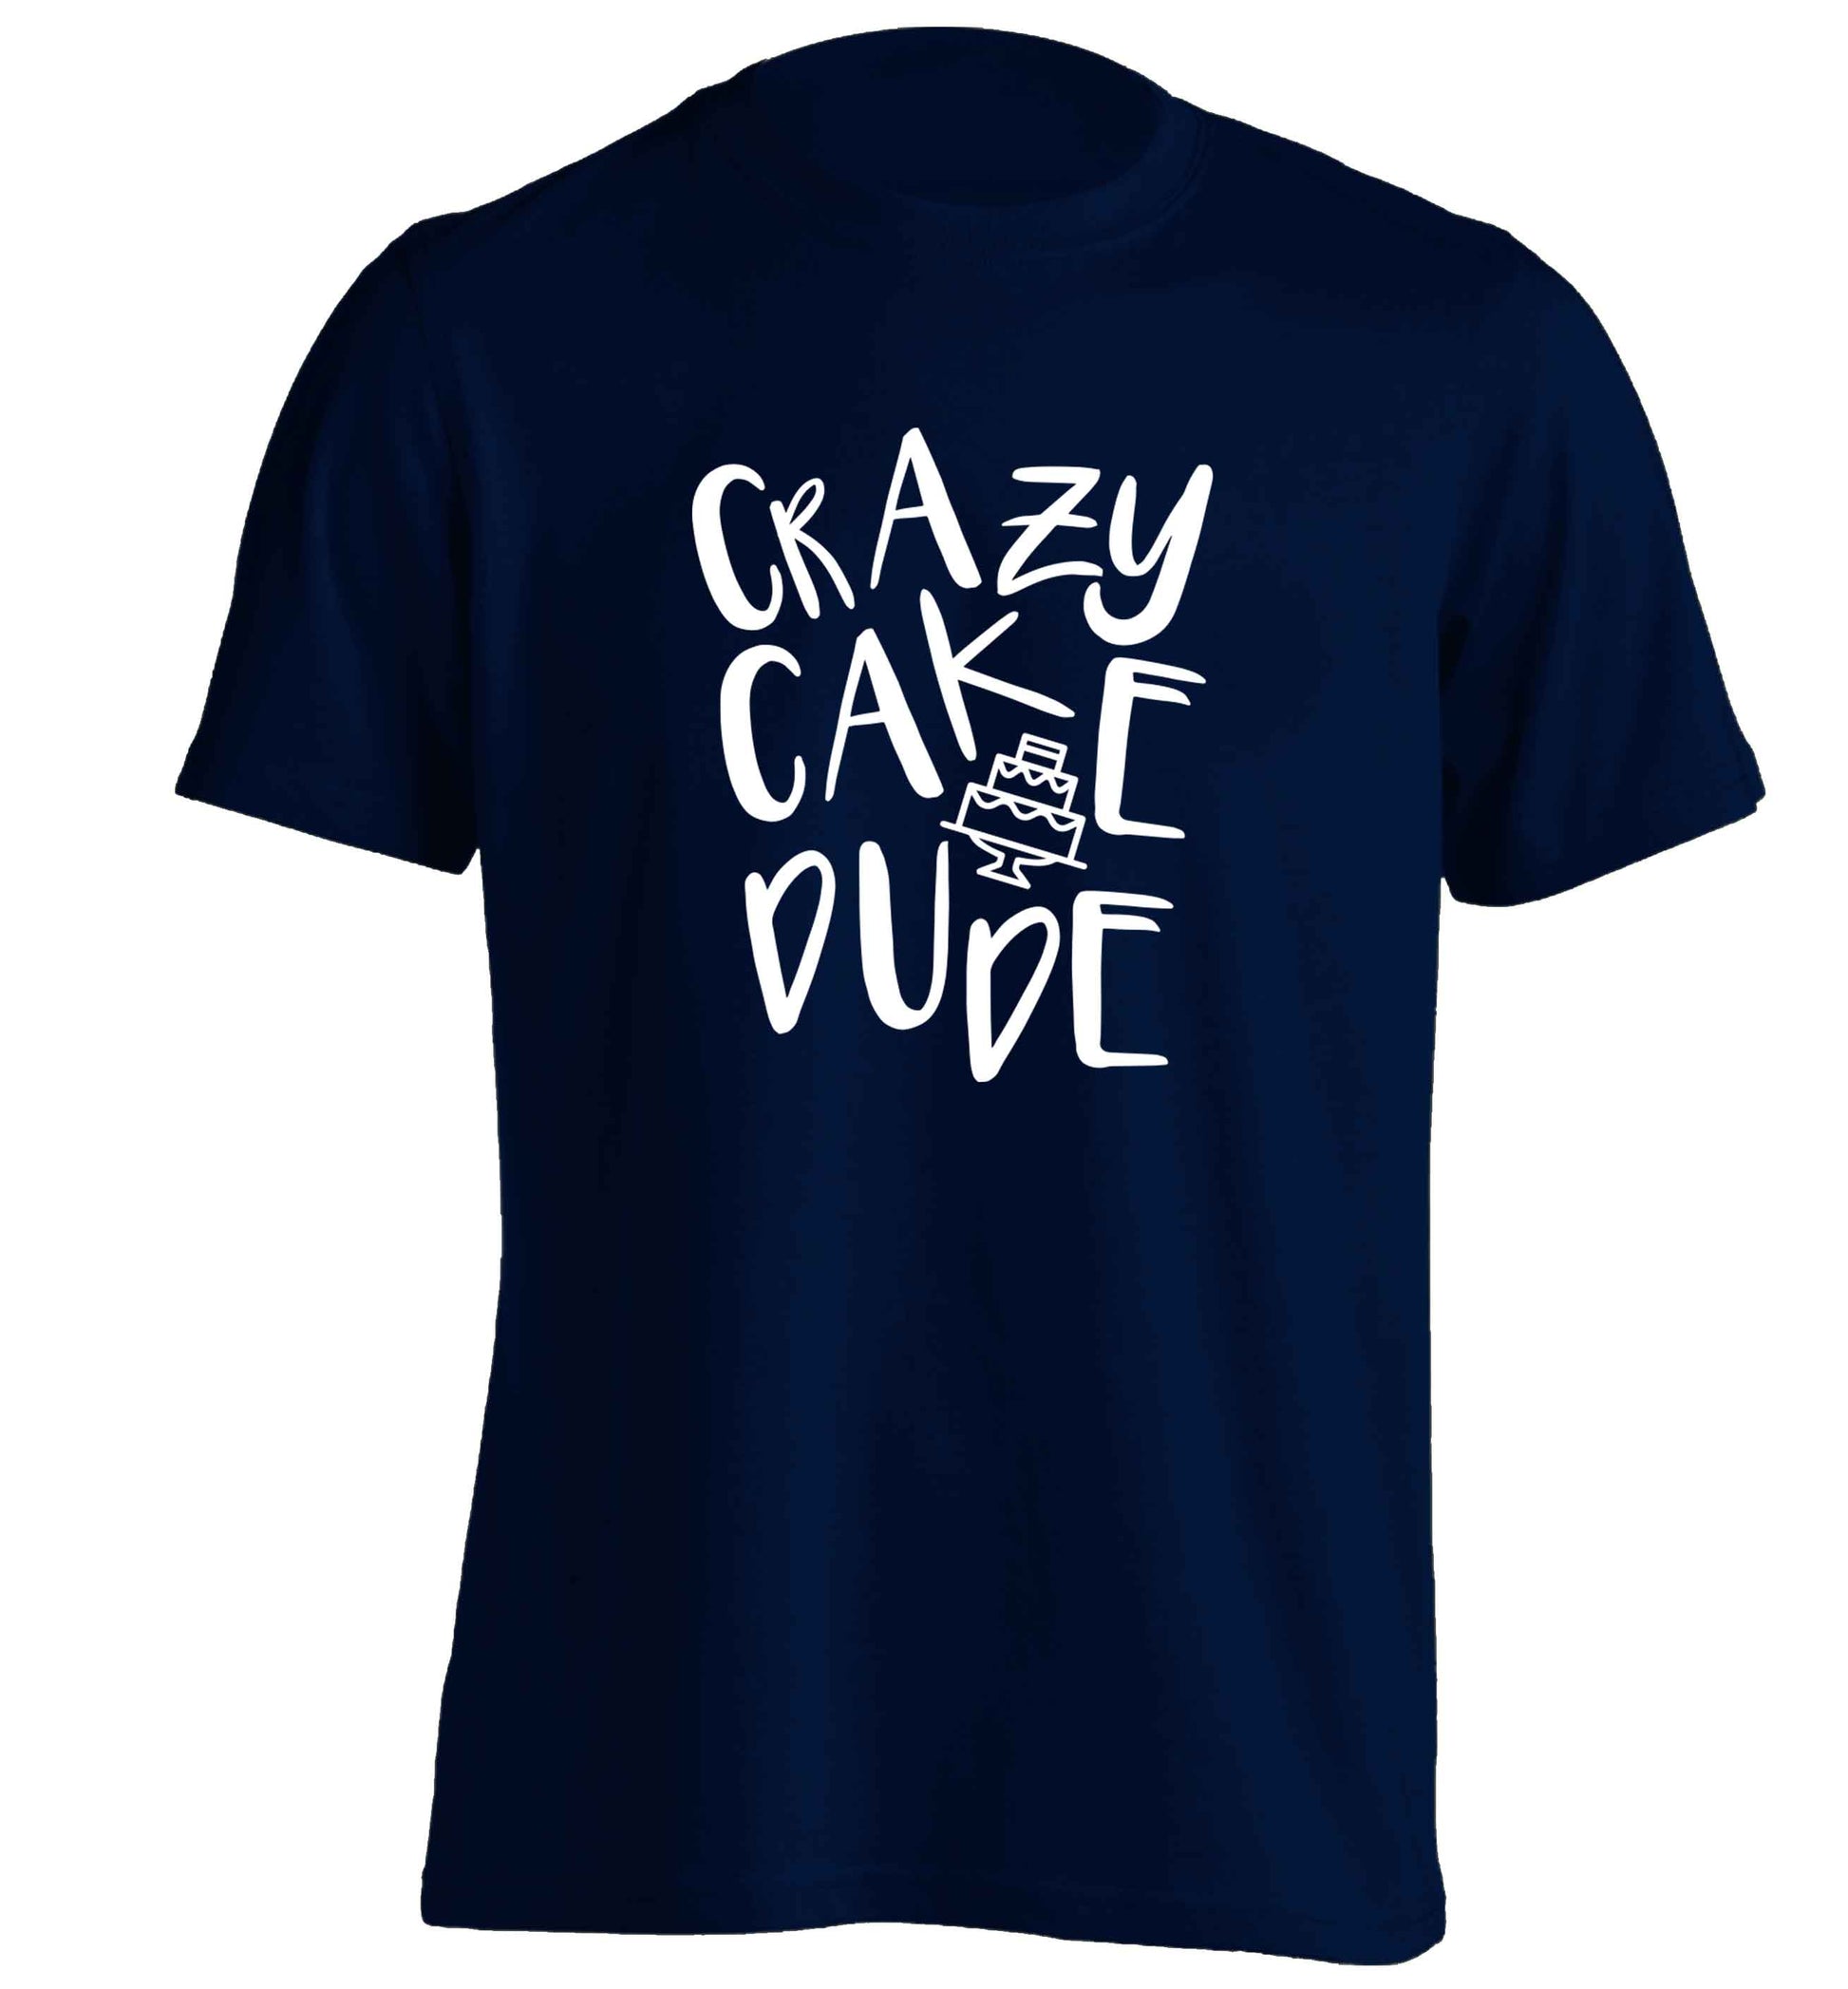 Crazy cake dude adults unisex navy Tshirt 2XL